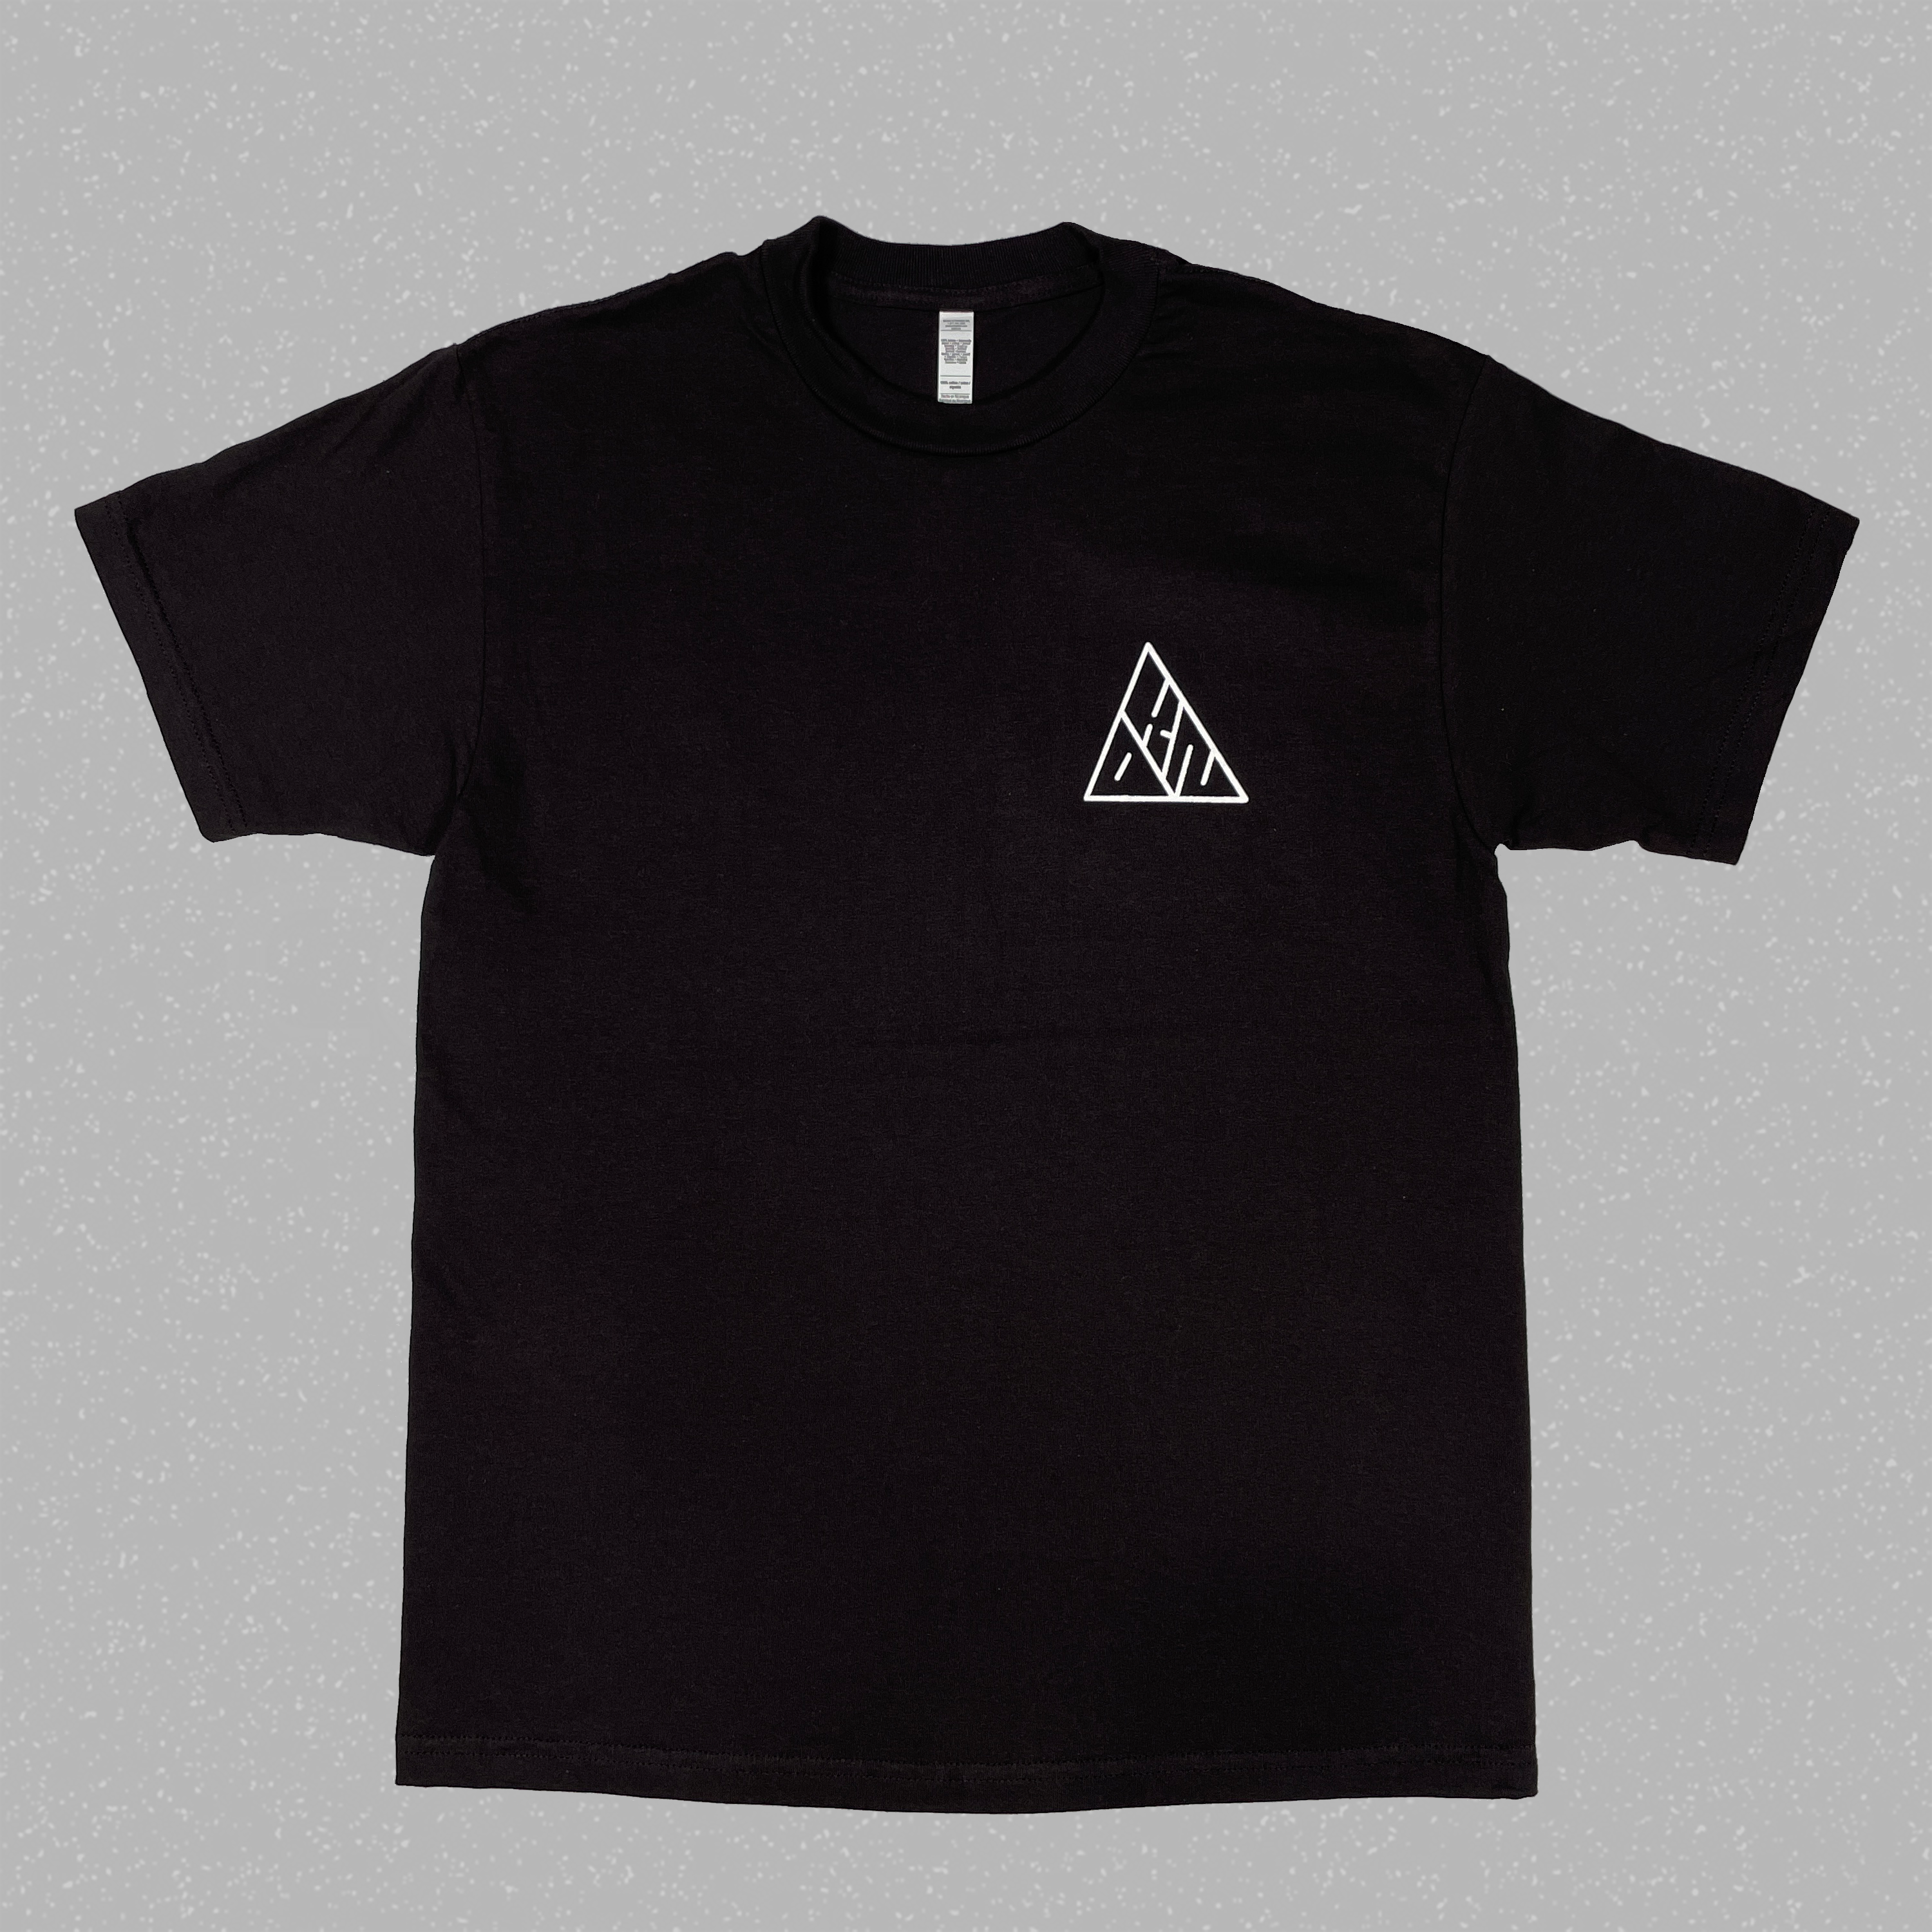 The Kindness Pyramid T-Shirt Black